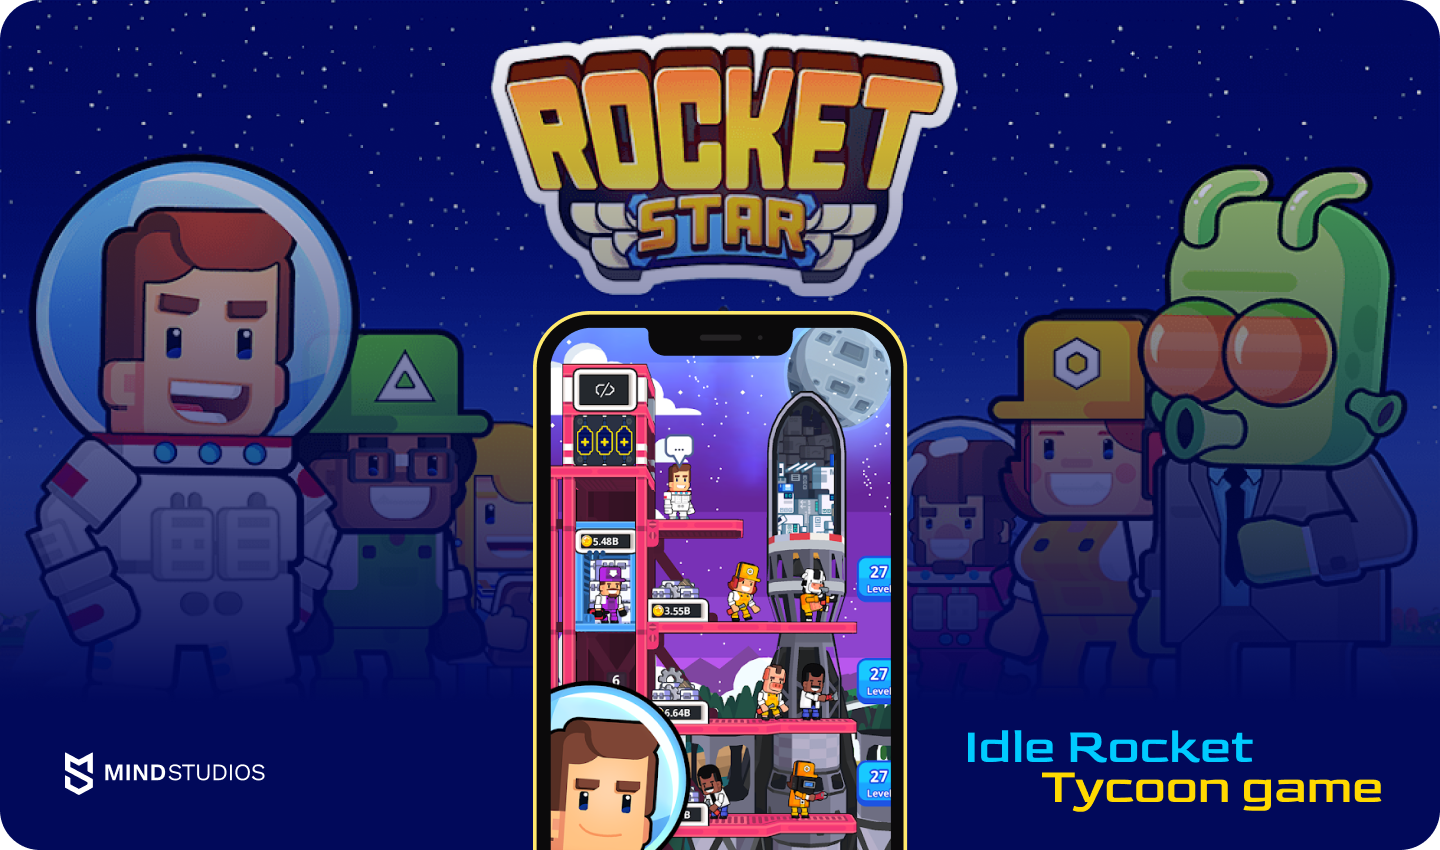 Idle Rocket Tycoon game